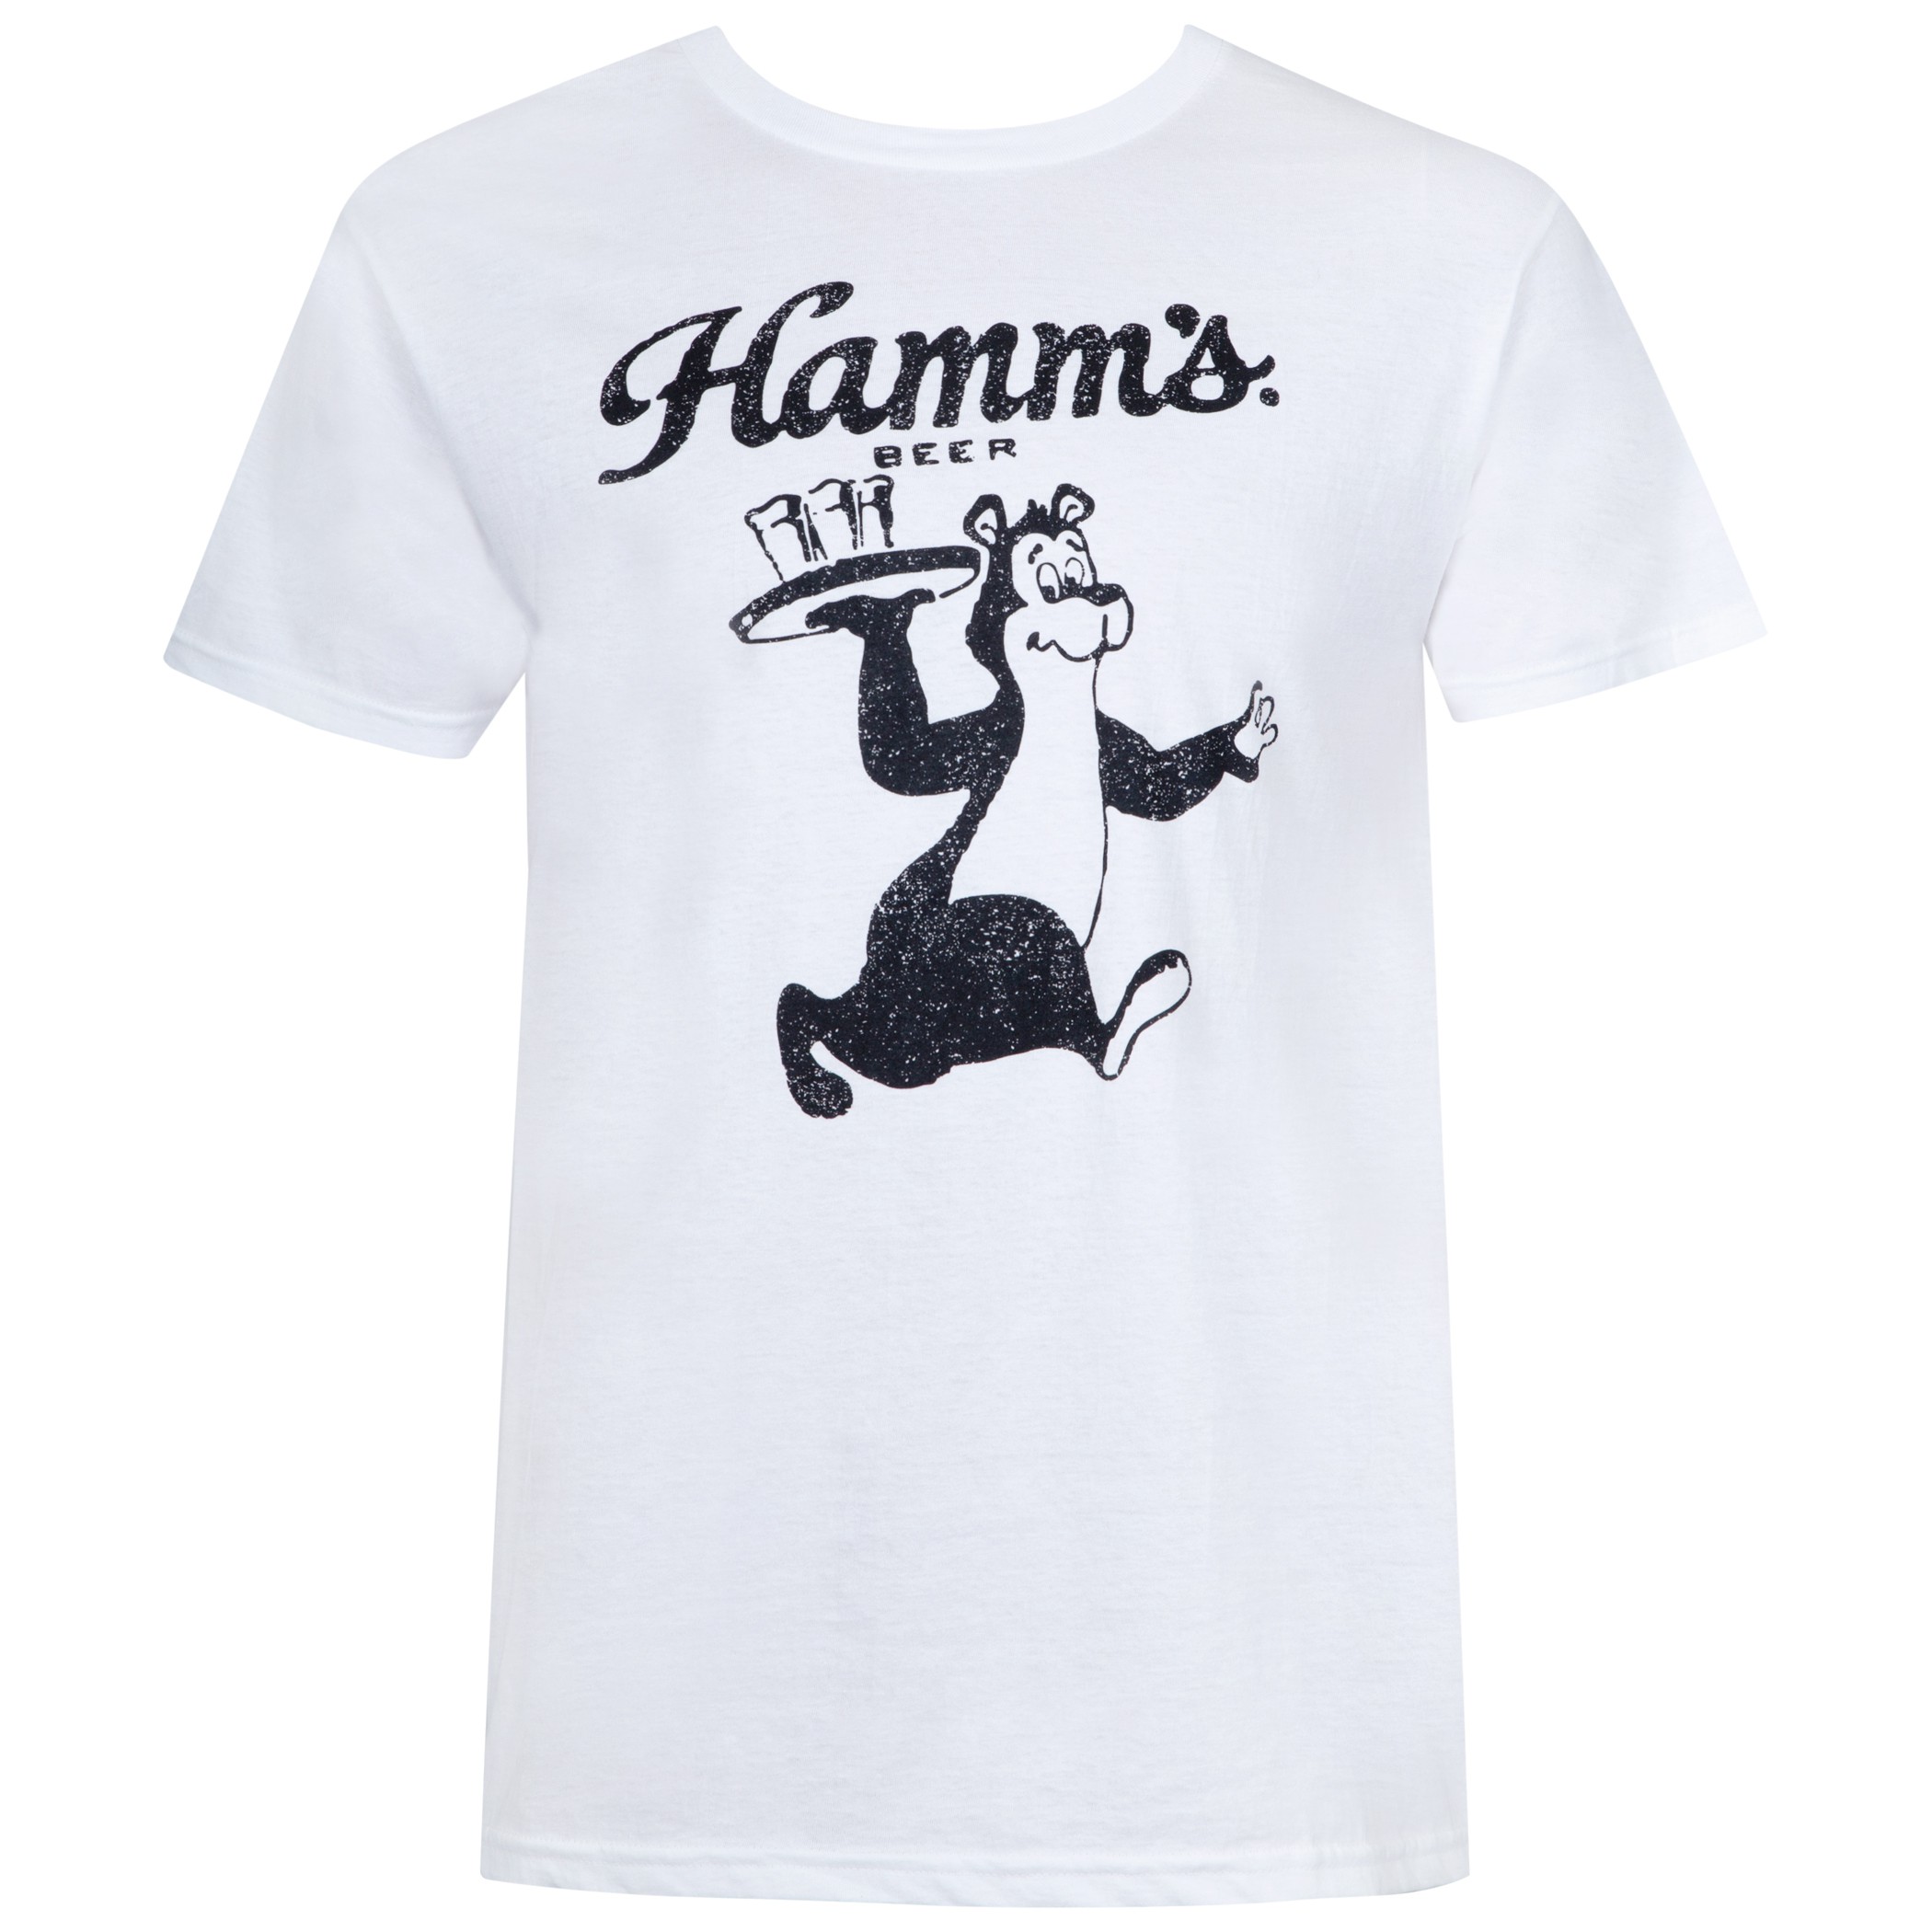 Hamm's Bear Waiter White Tee Shirt